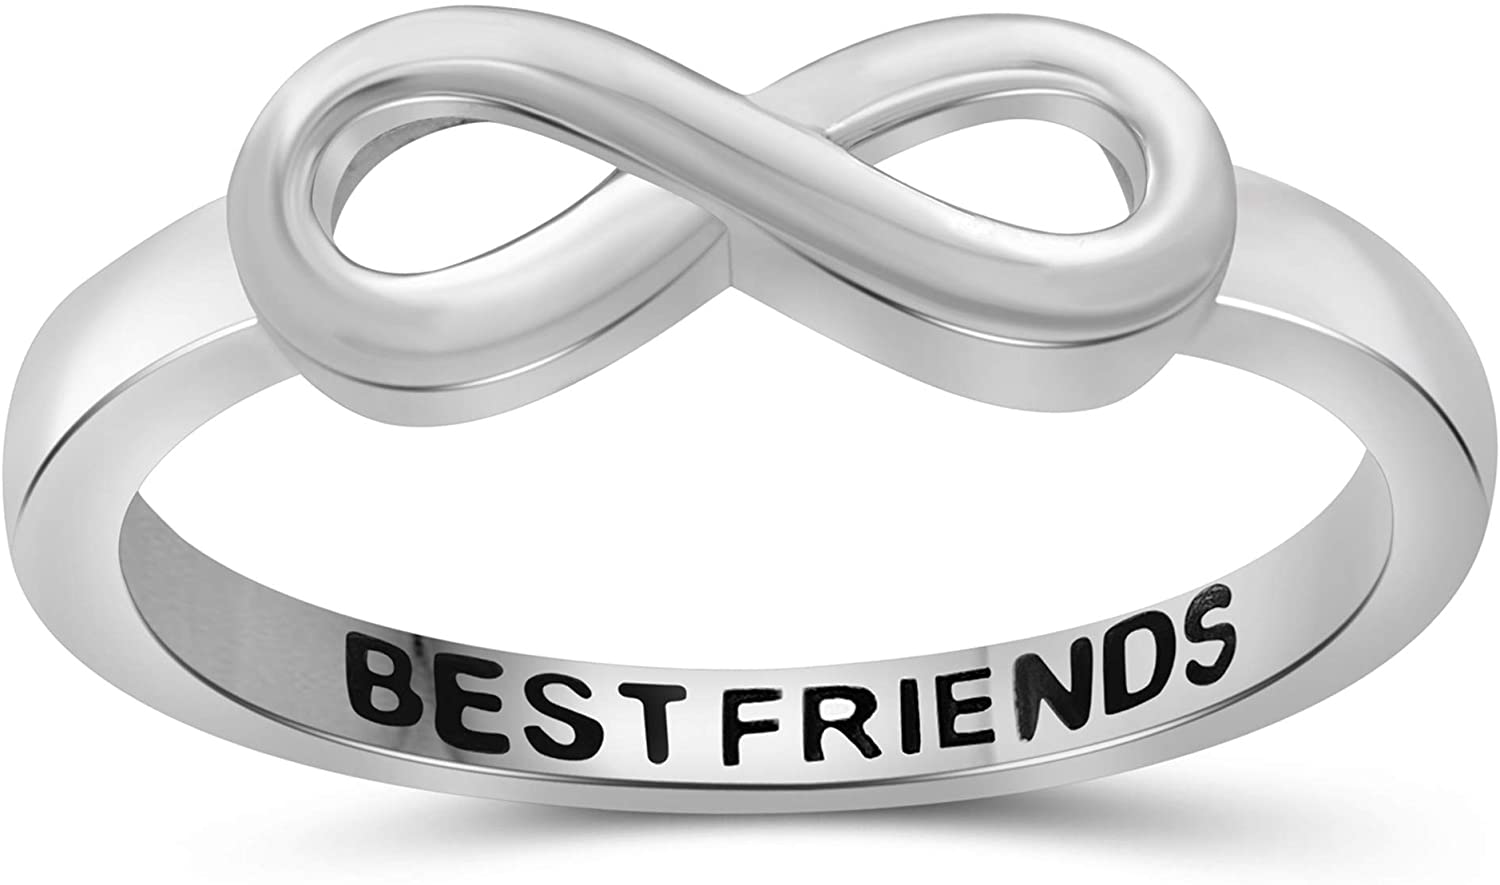 Diamond Friendship Rings - Celebrating The Beauty Of Friendship